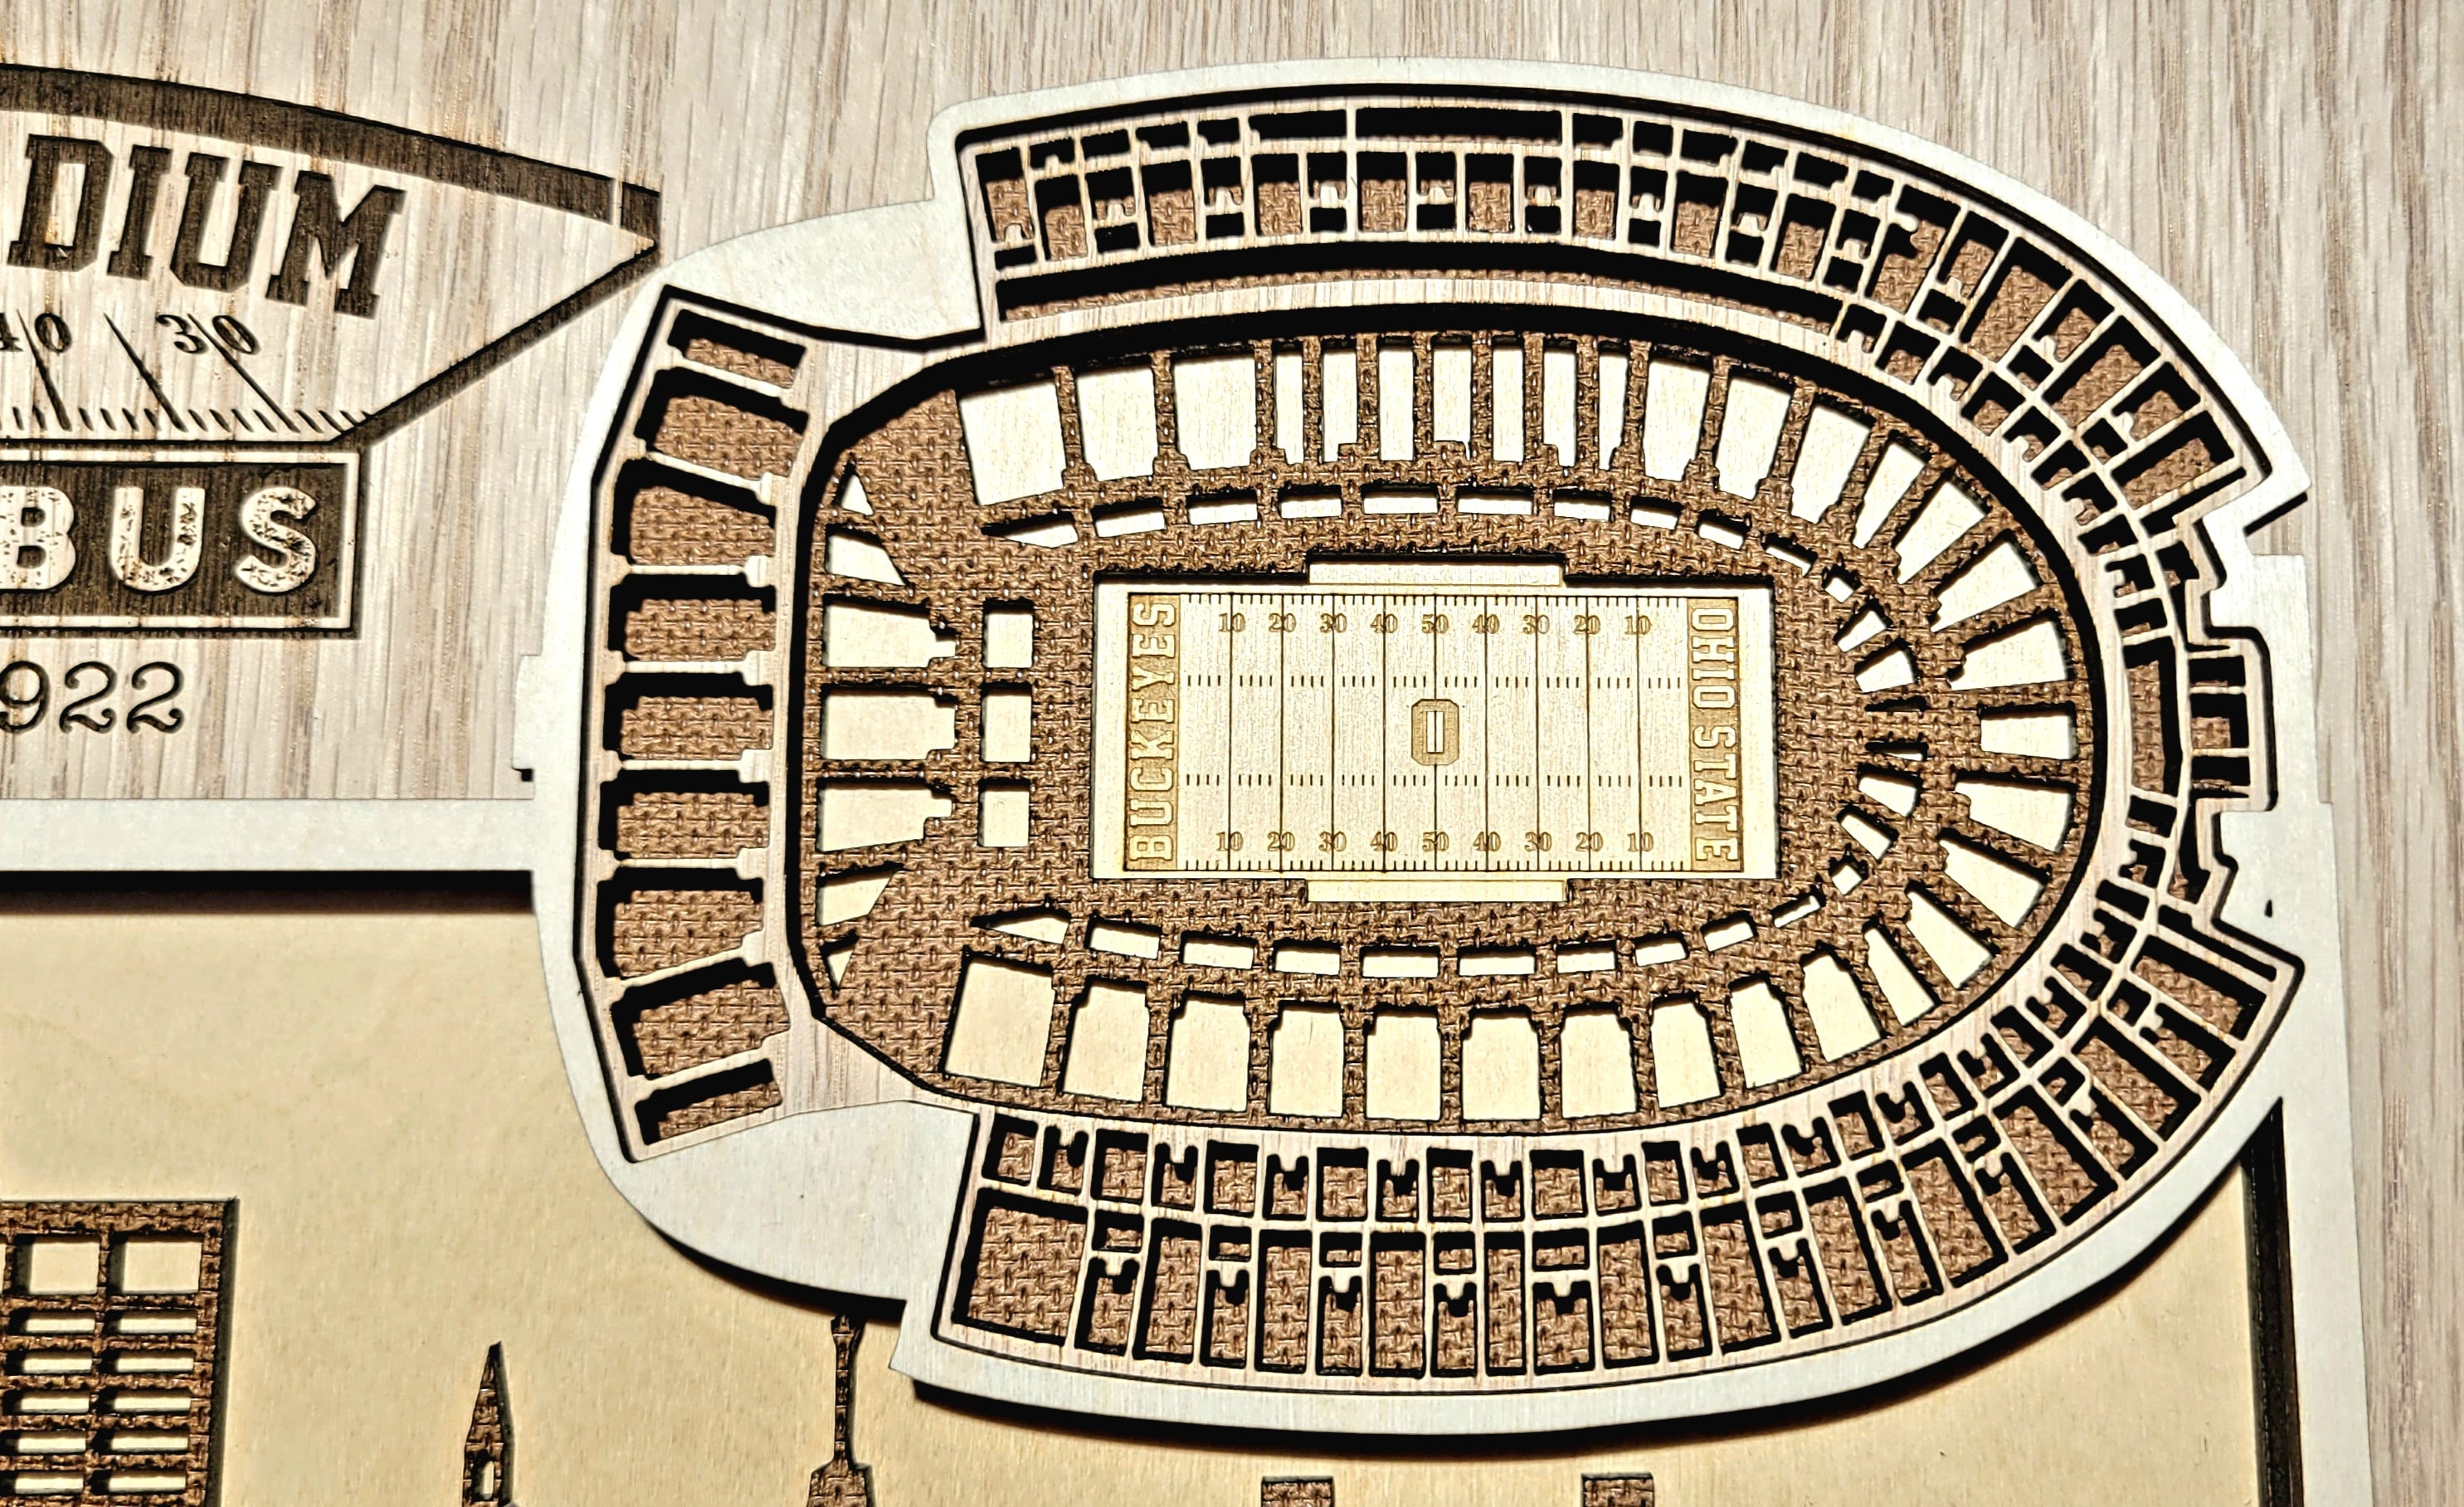 Ohio Stadium - Home of the Ohio State Buckeyes